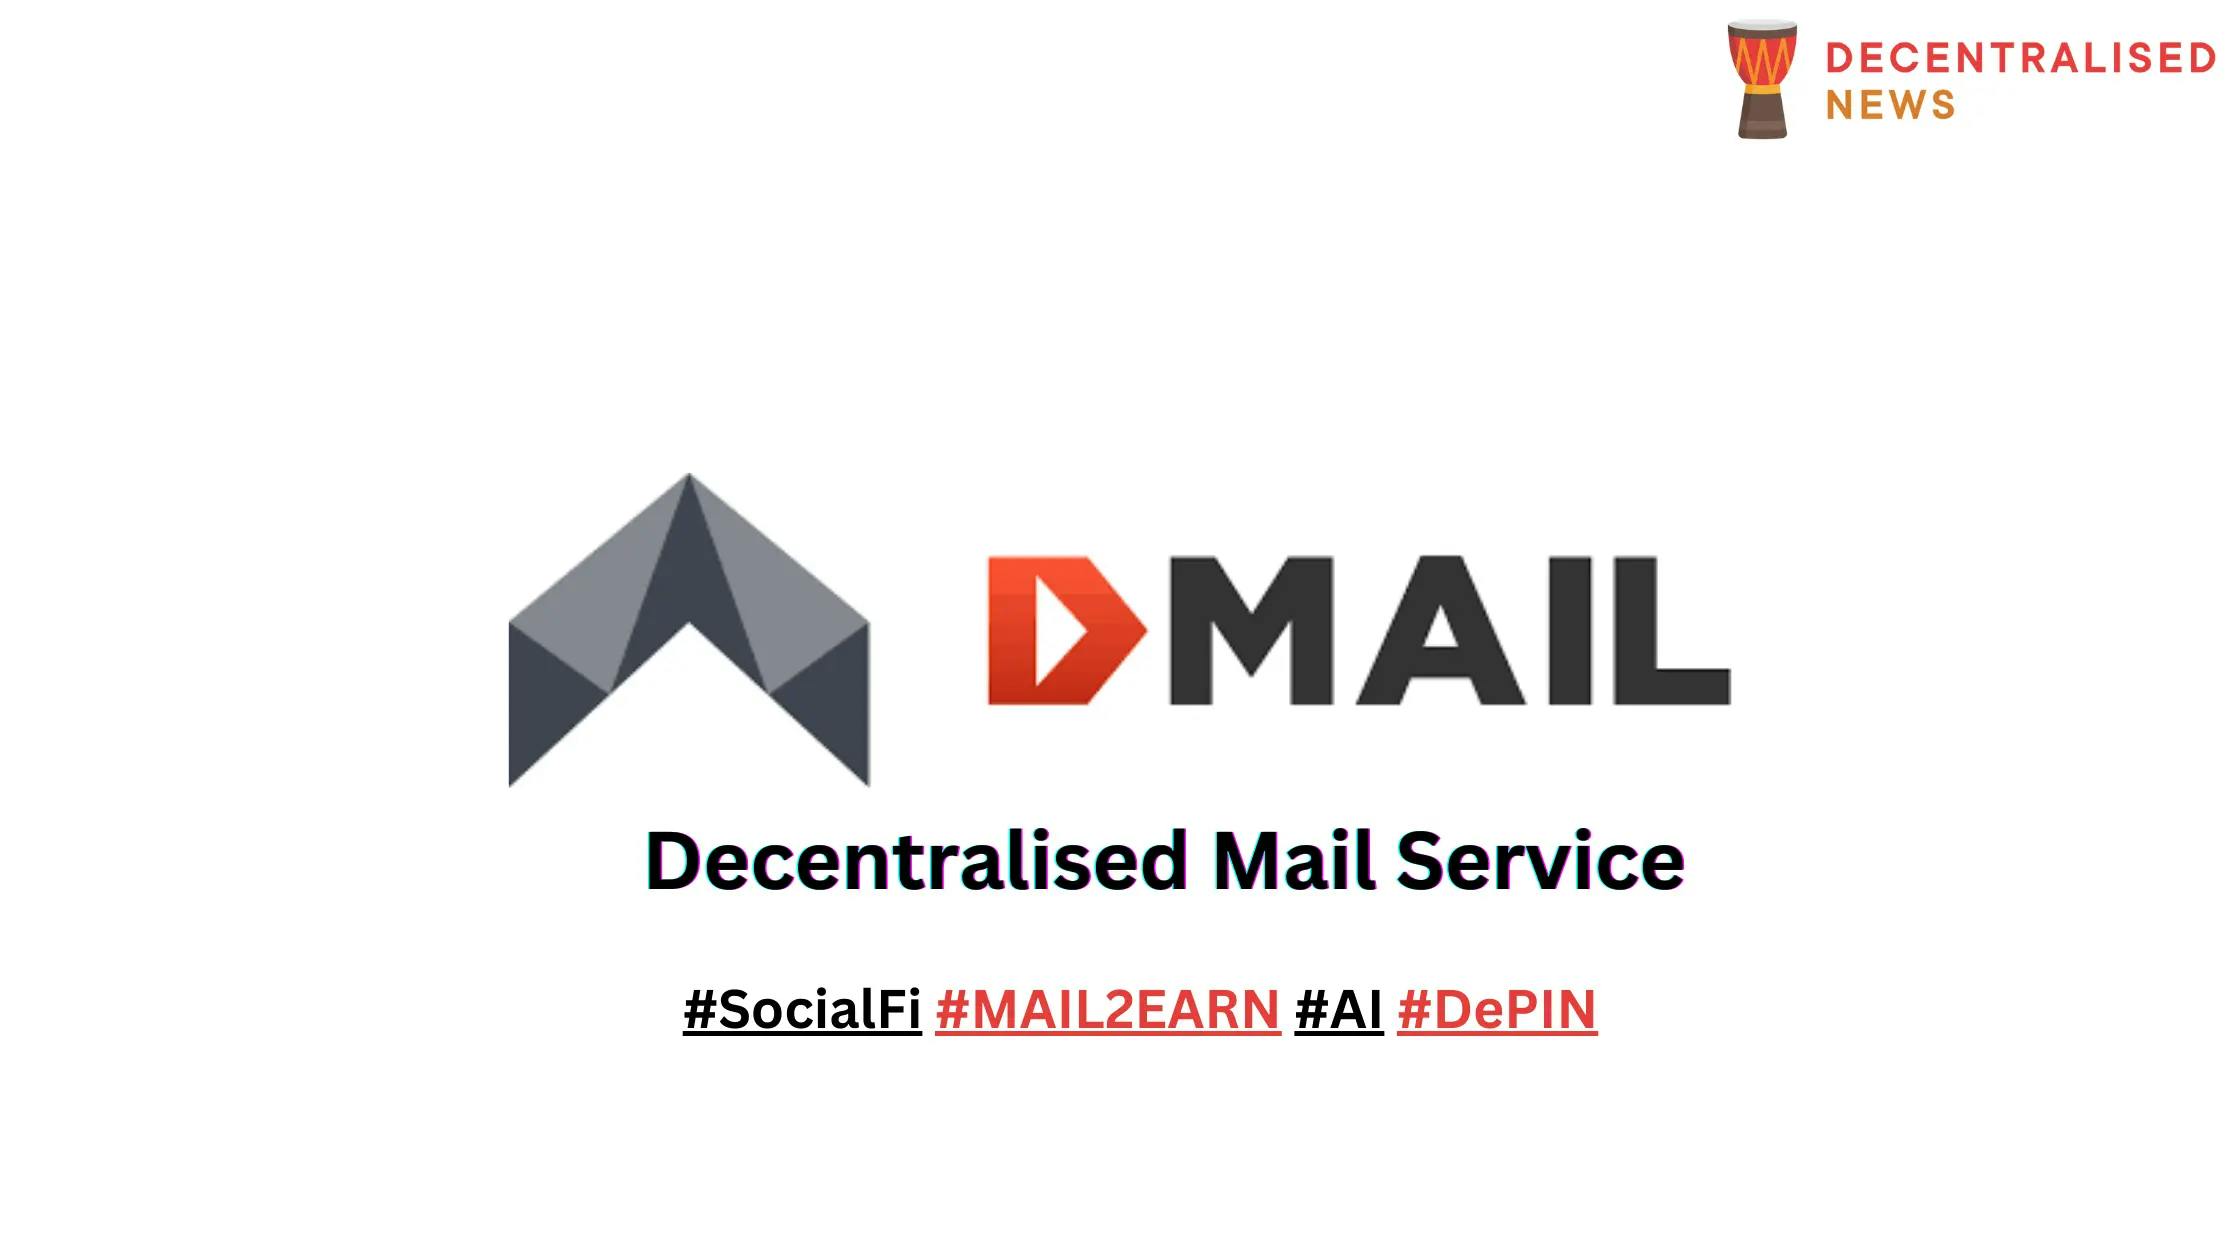 DMail Decentralized Web3 Mail Service Review